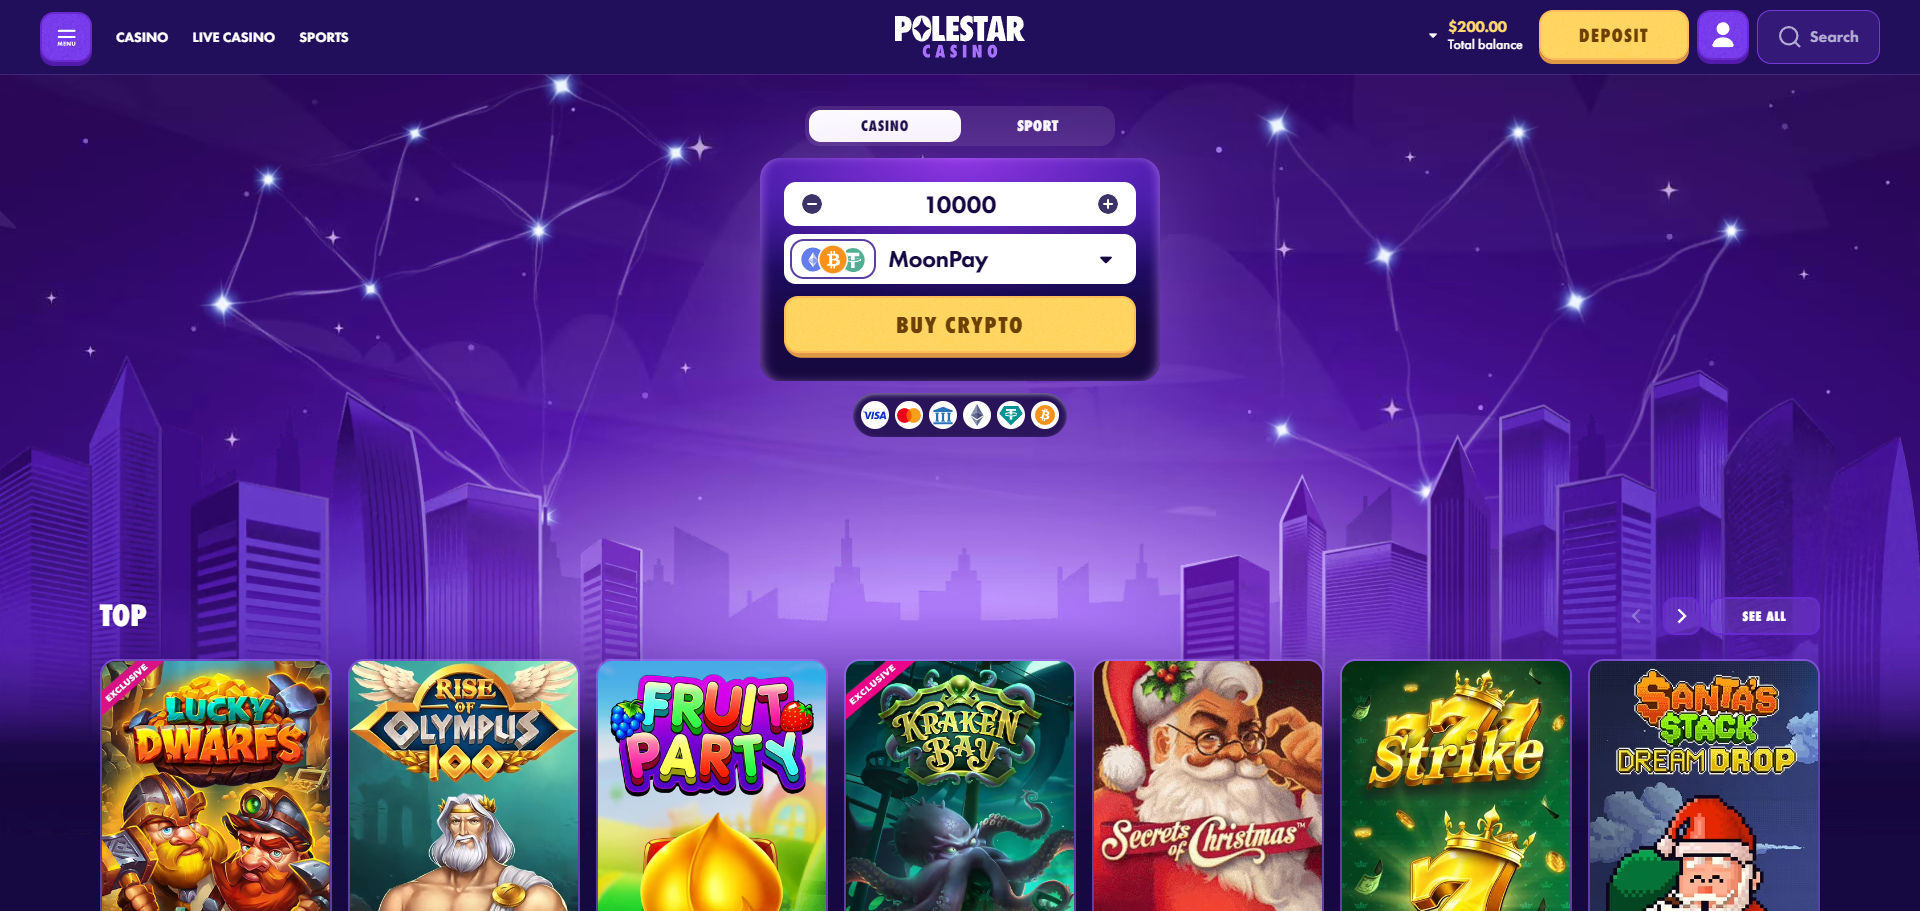 Polestar Casino Home